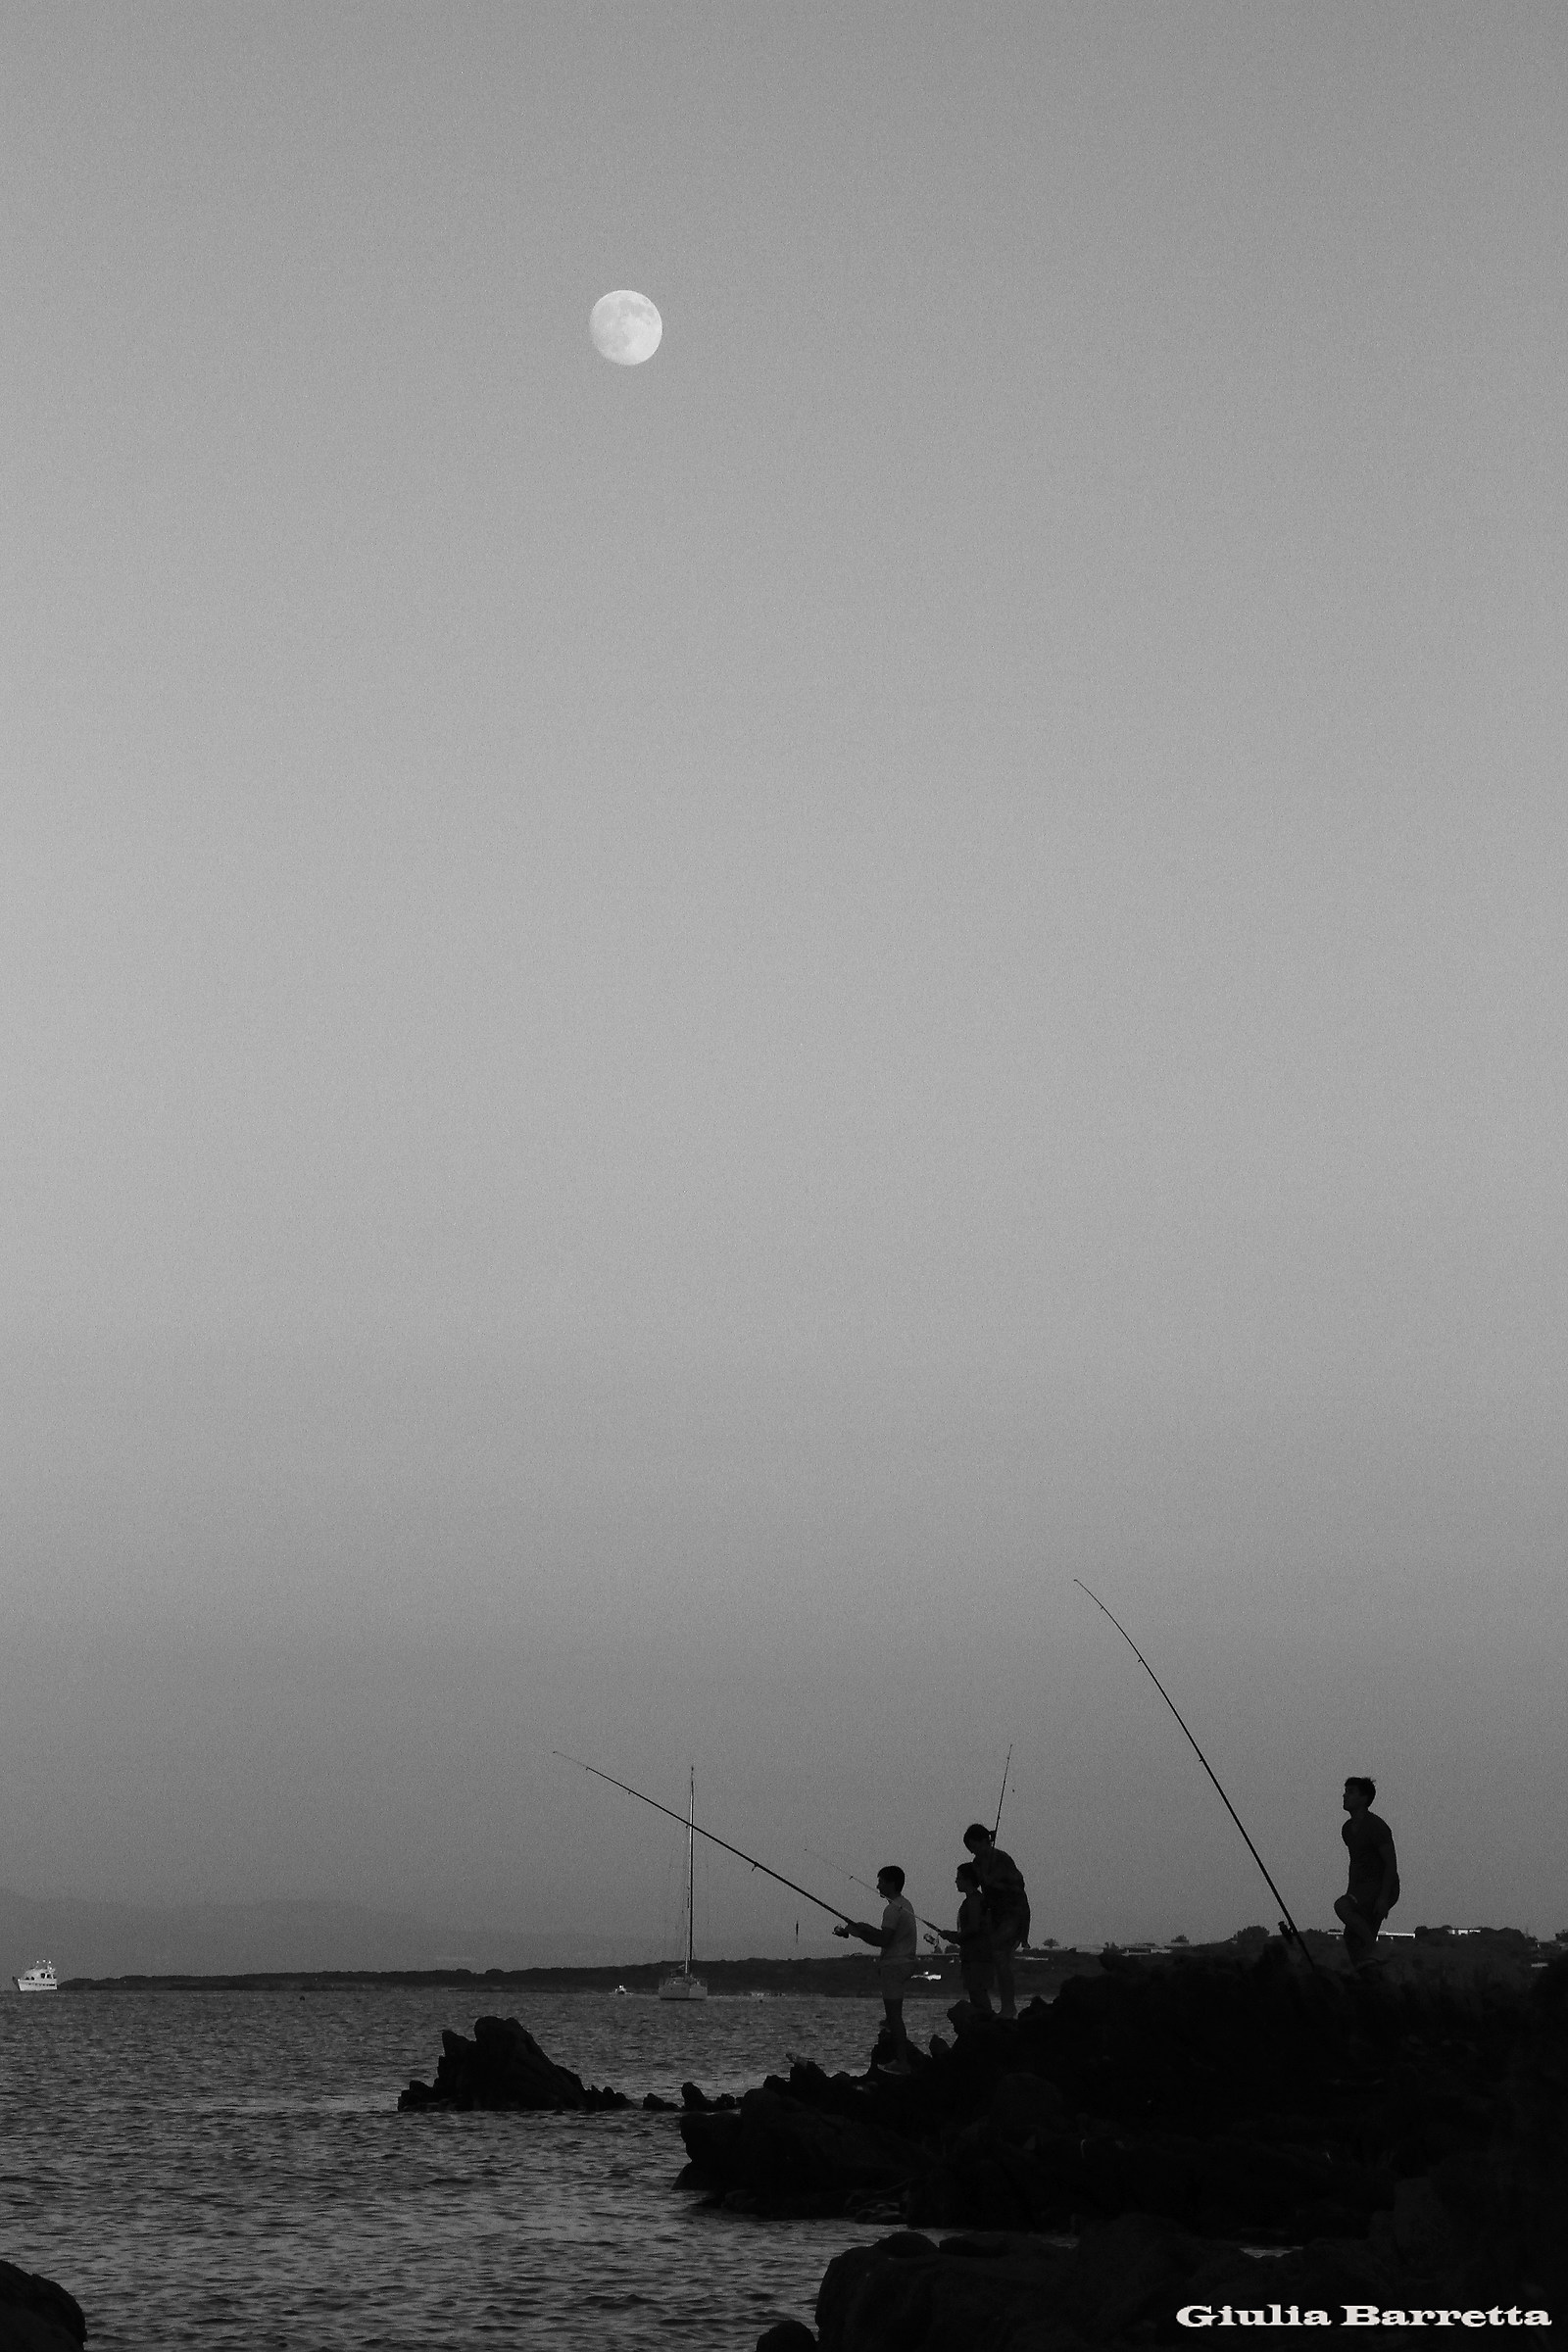 Small fishermen in the moonlight...